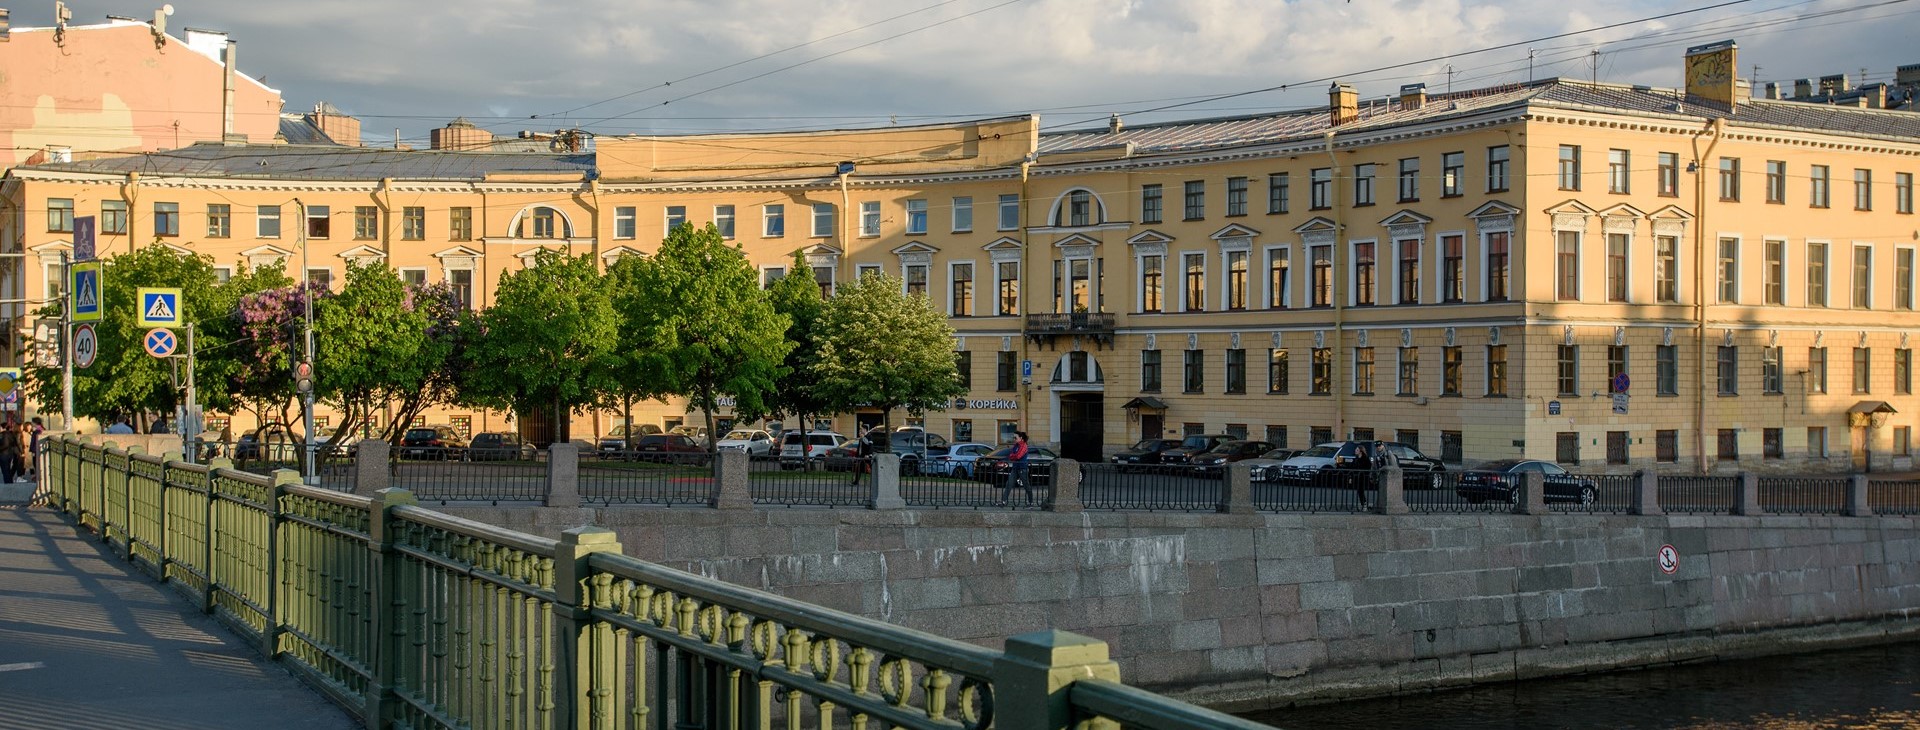 Набережная Фонтанки Санкт-Петербург архитектура